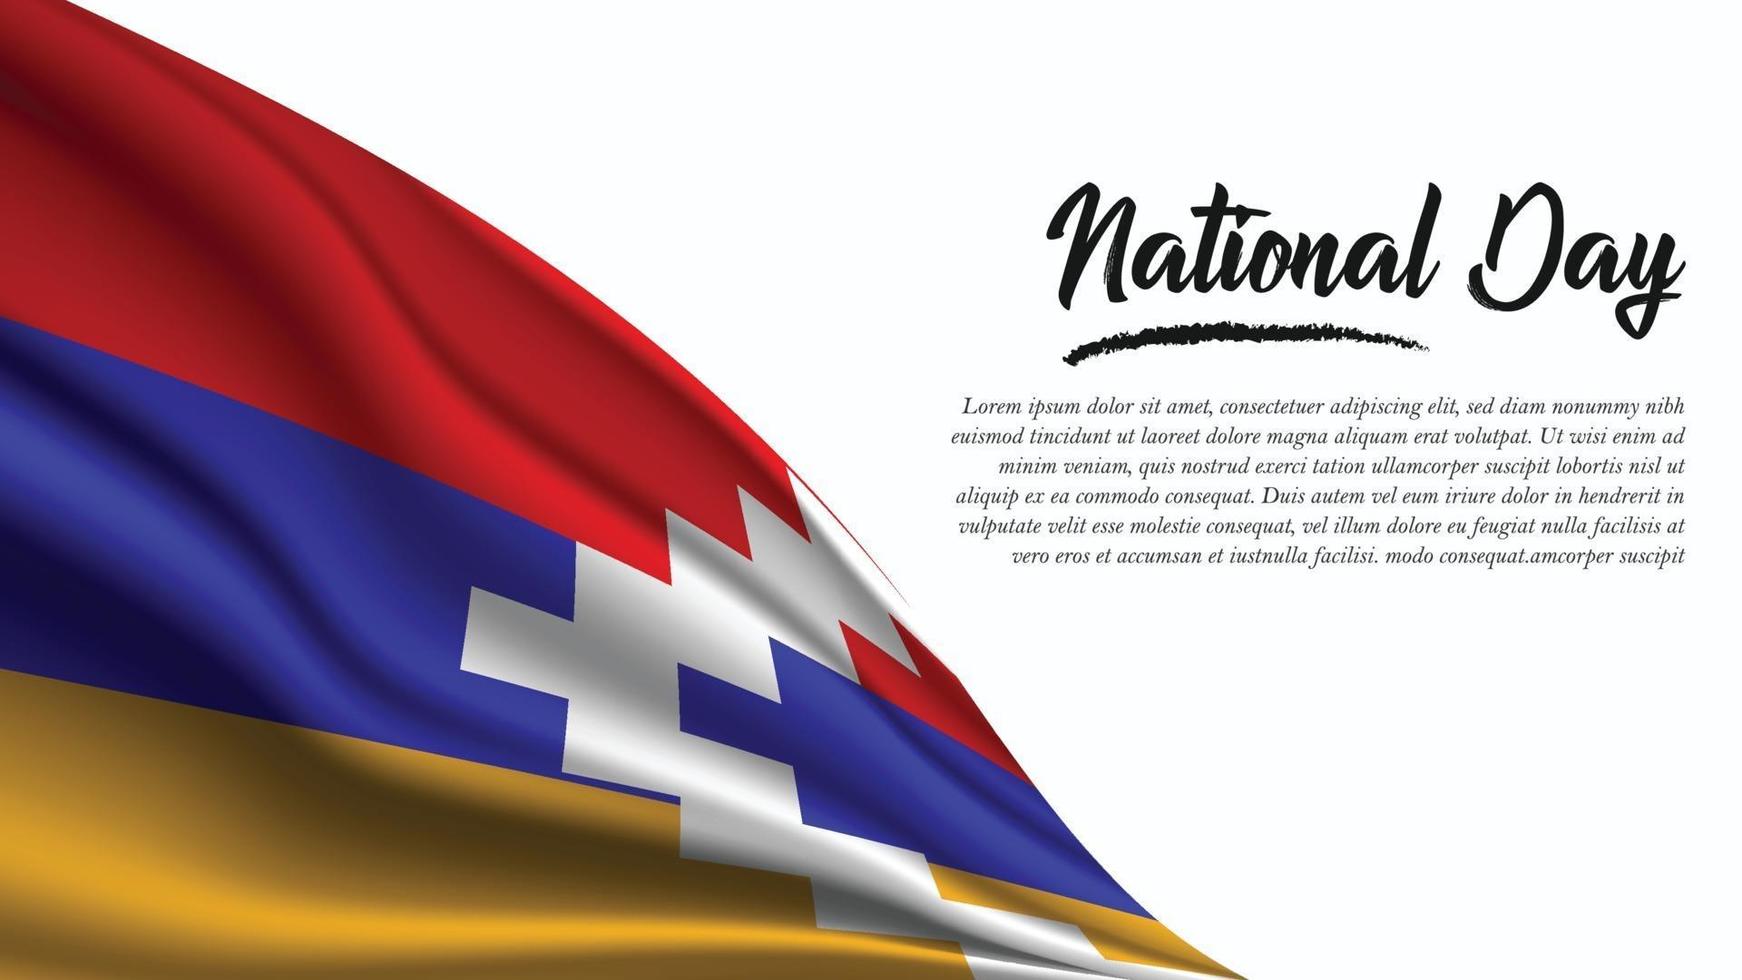 National Day Banner with Nagorno Karabakh Flag background vector